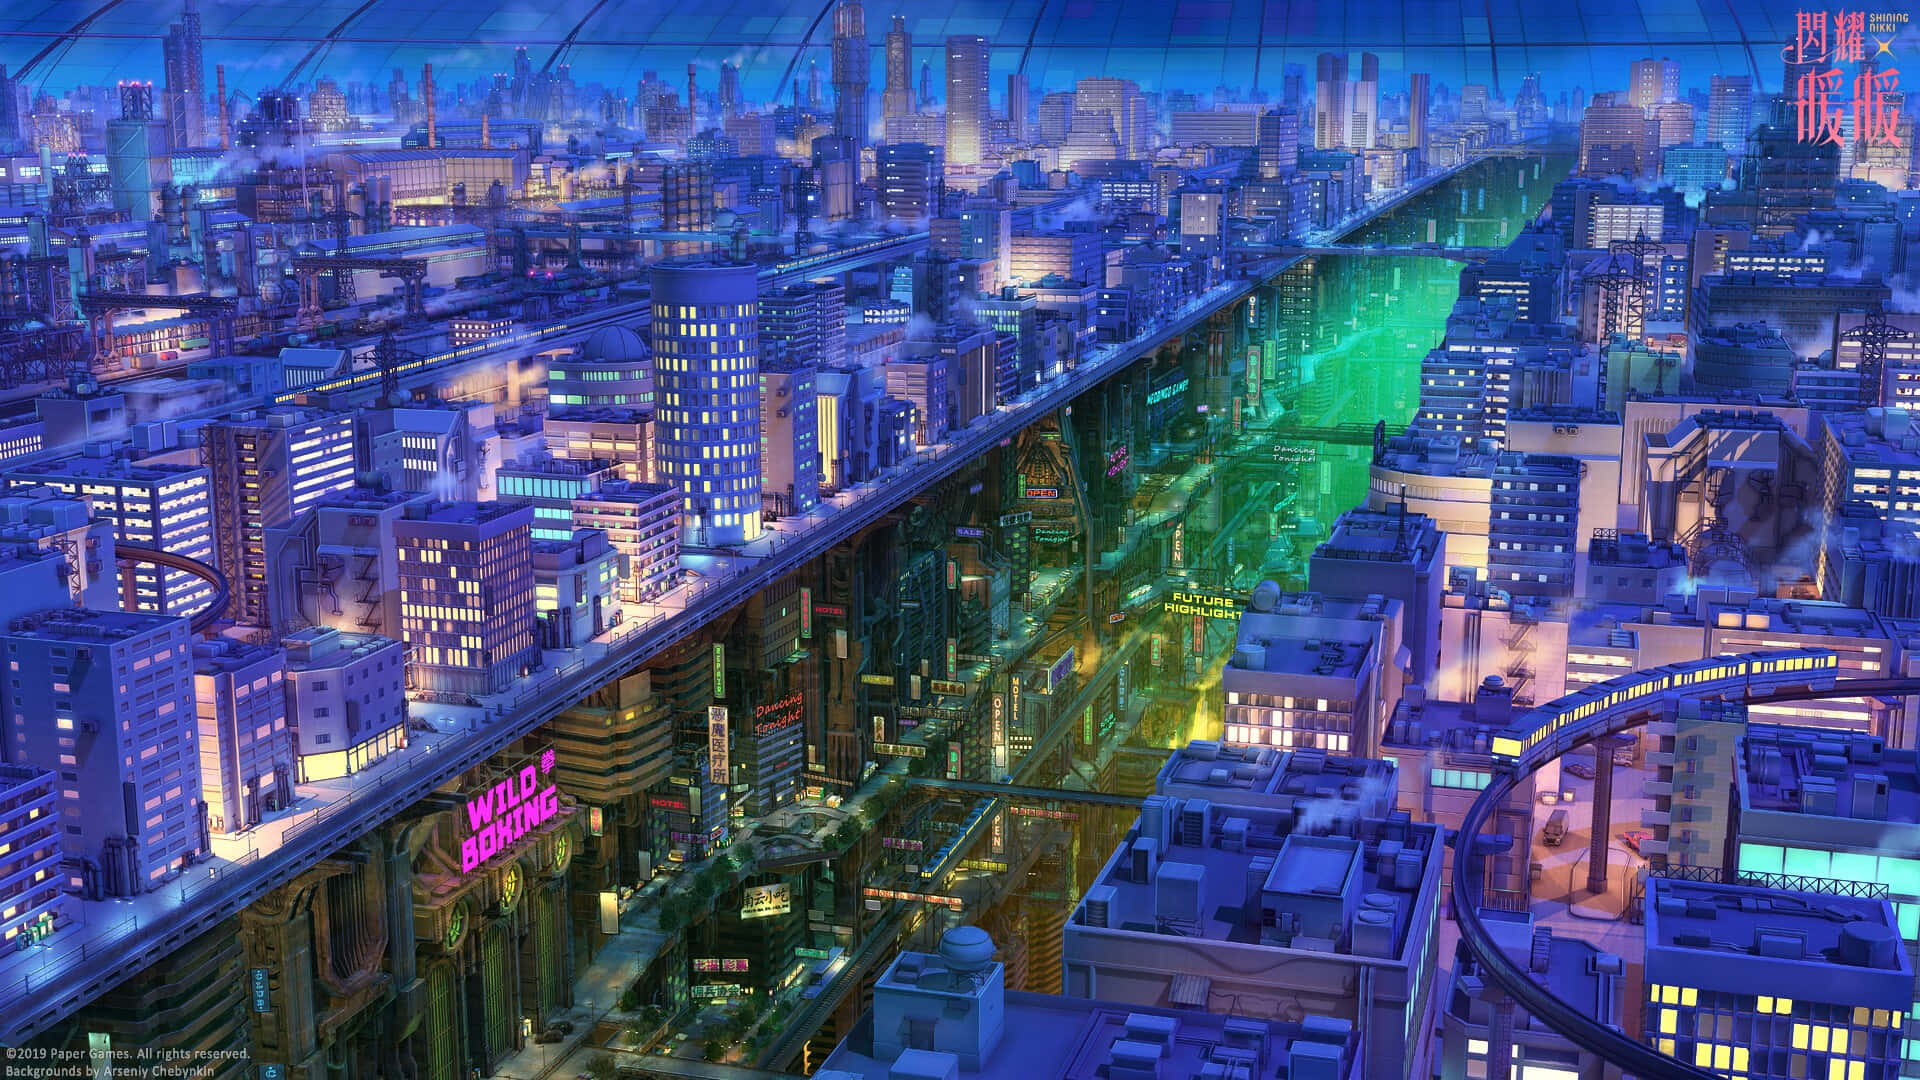 "Exploring the City of Tomorrow" Wallpaper